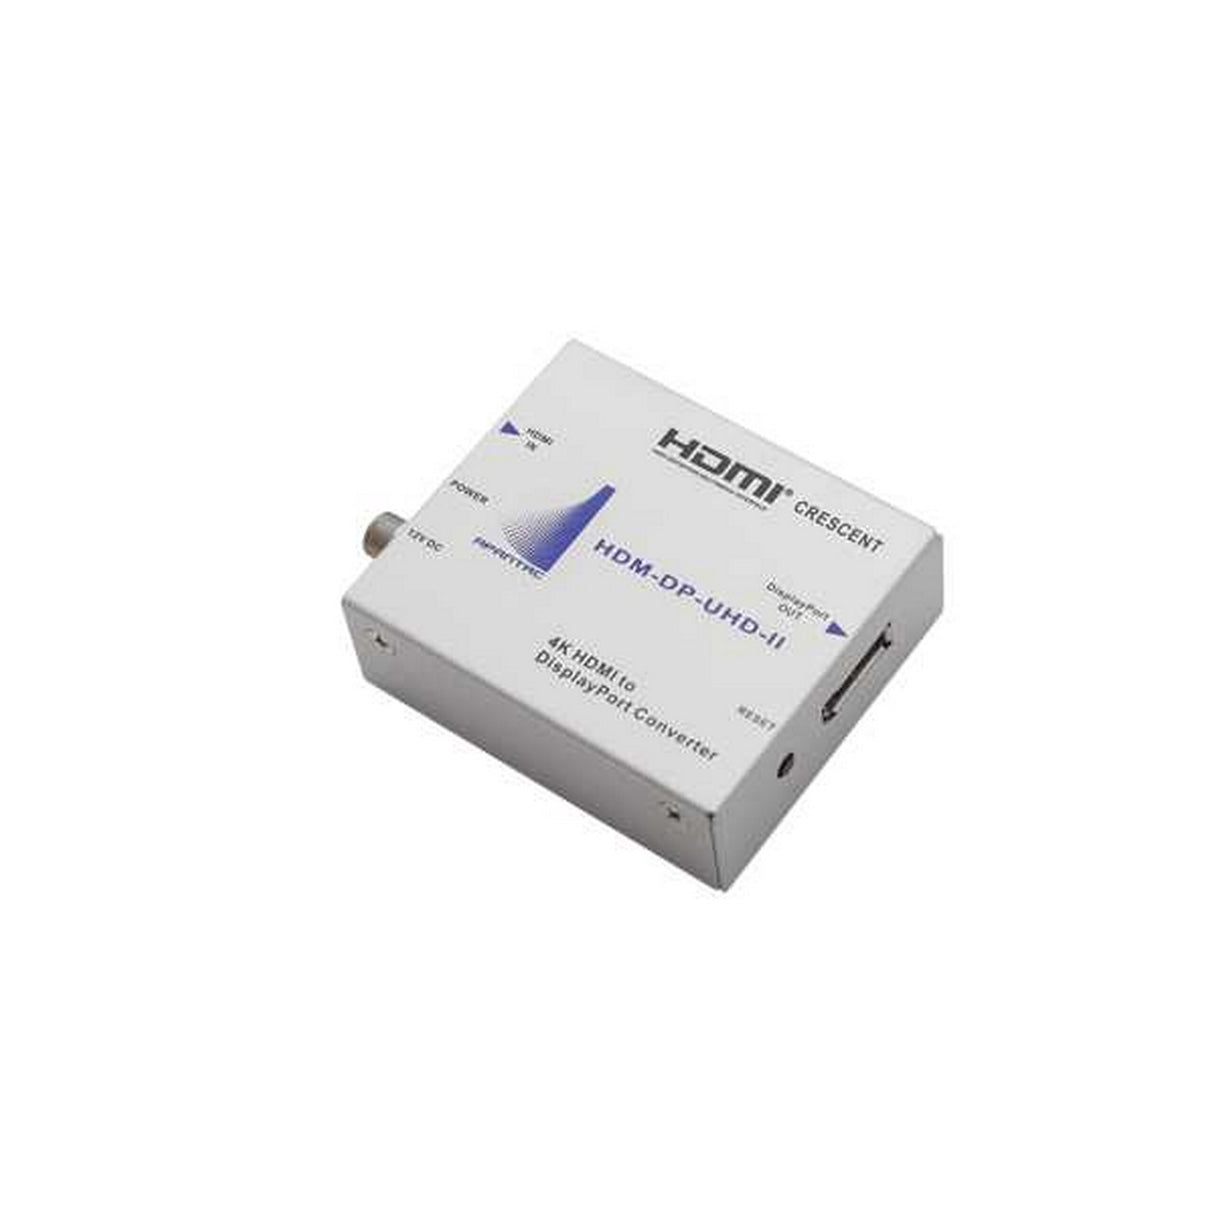 Apantac HDM-DP-UHD-II HDMI 2.0 to DP 1.2 Converter